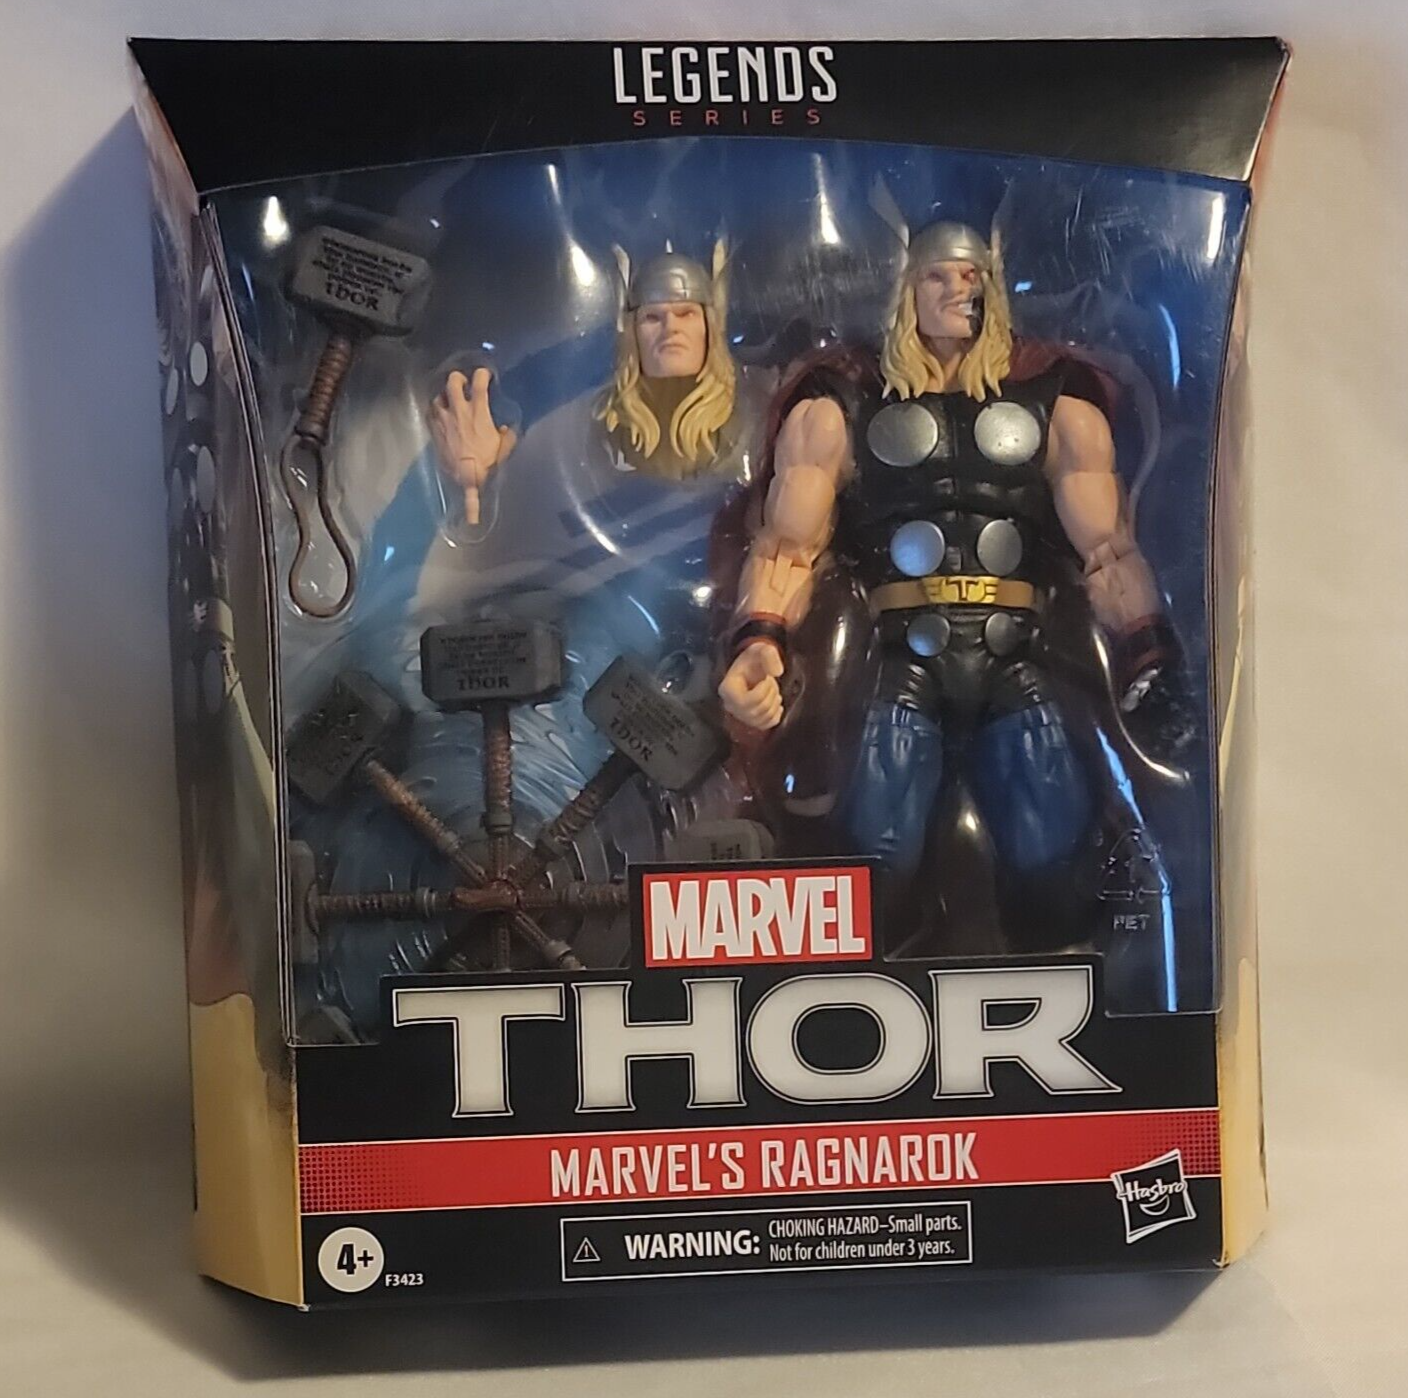 Marvel Legends Series Thor Marvel's Ragnarok Hasbro 6" Figure Package Damage - $34.82